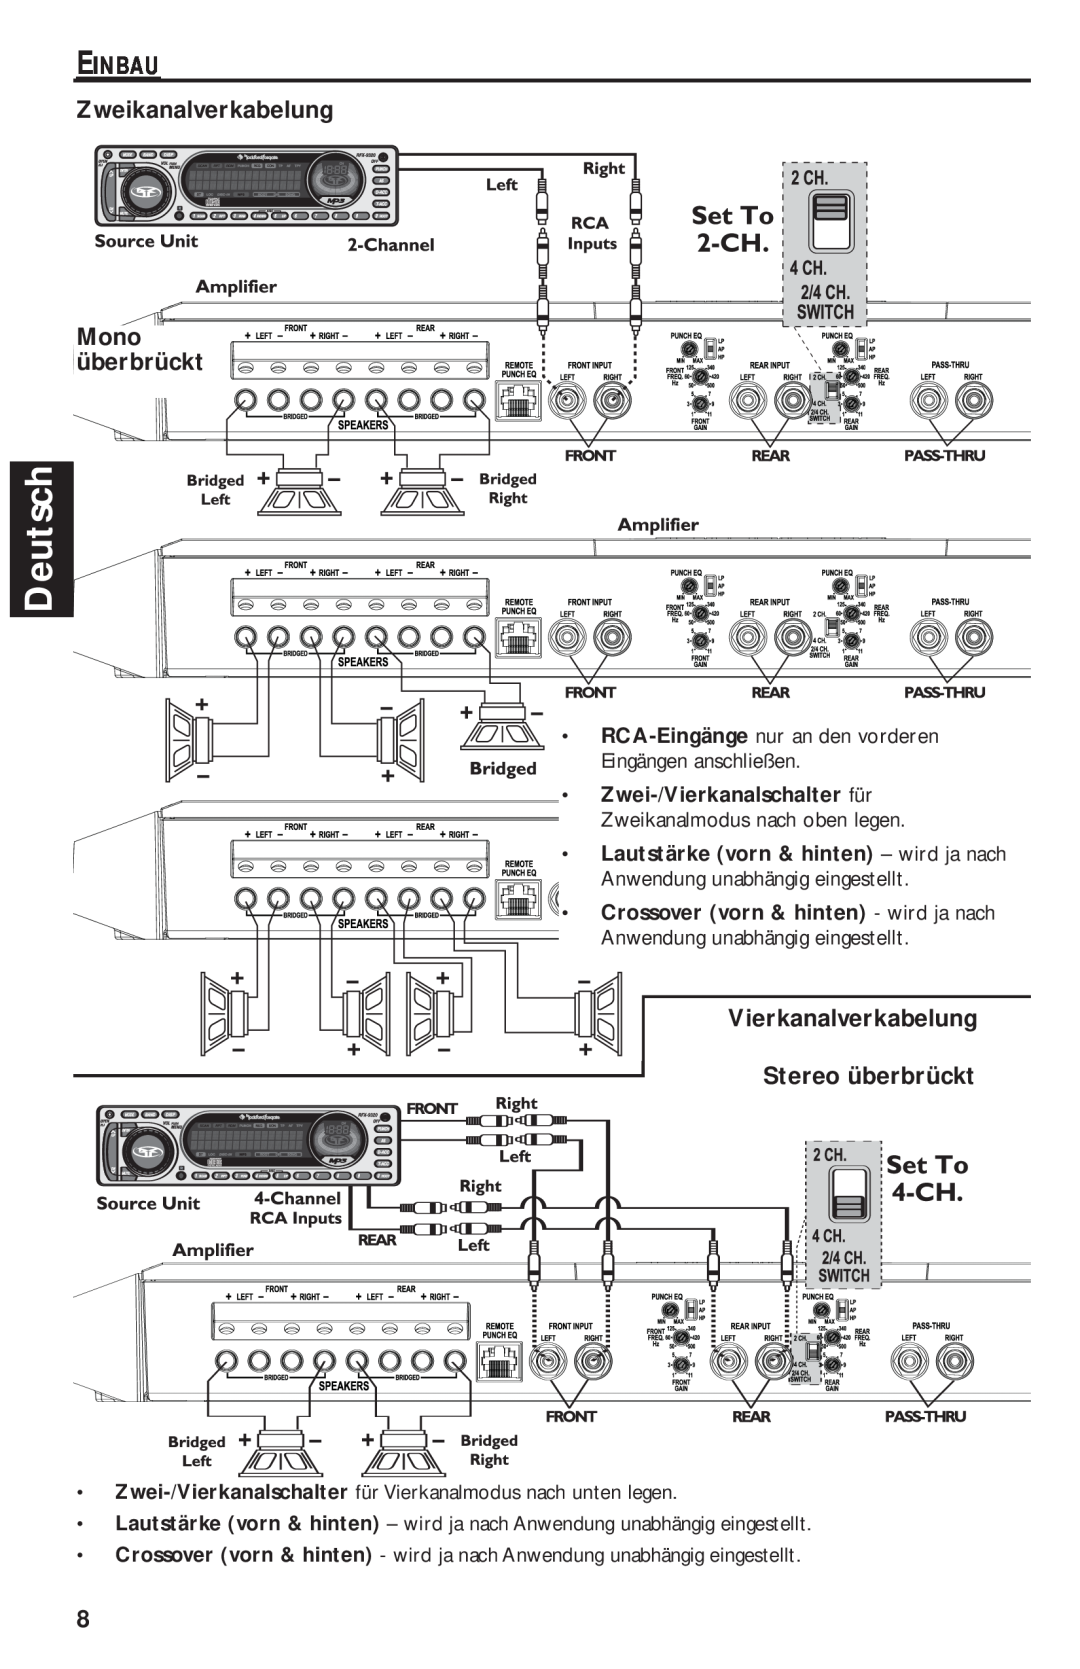 Rockford Fosgate T1000-4 manual Deutsch, Einbau, Mono, Vierkanalverkabelung, Stereo überbrückt, Zweikanalverkabelung 